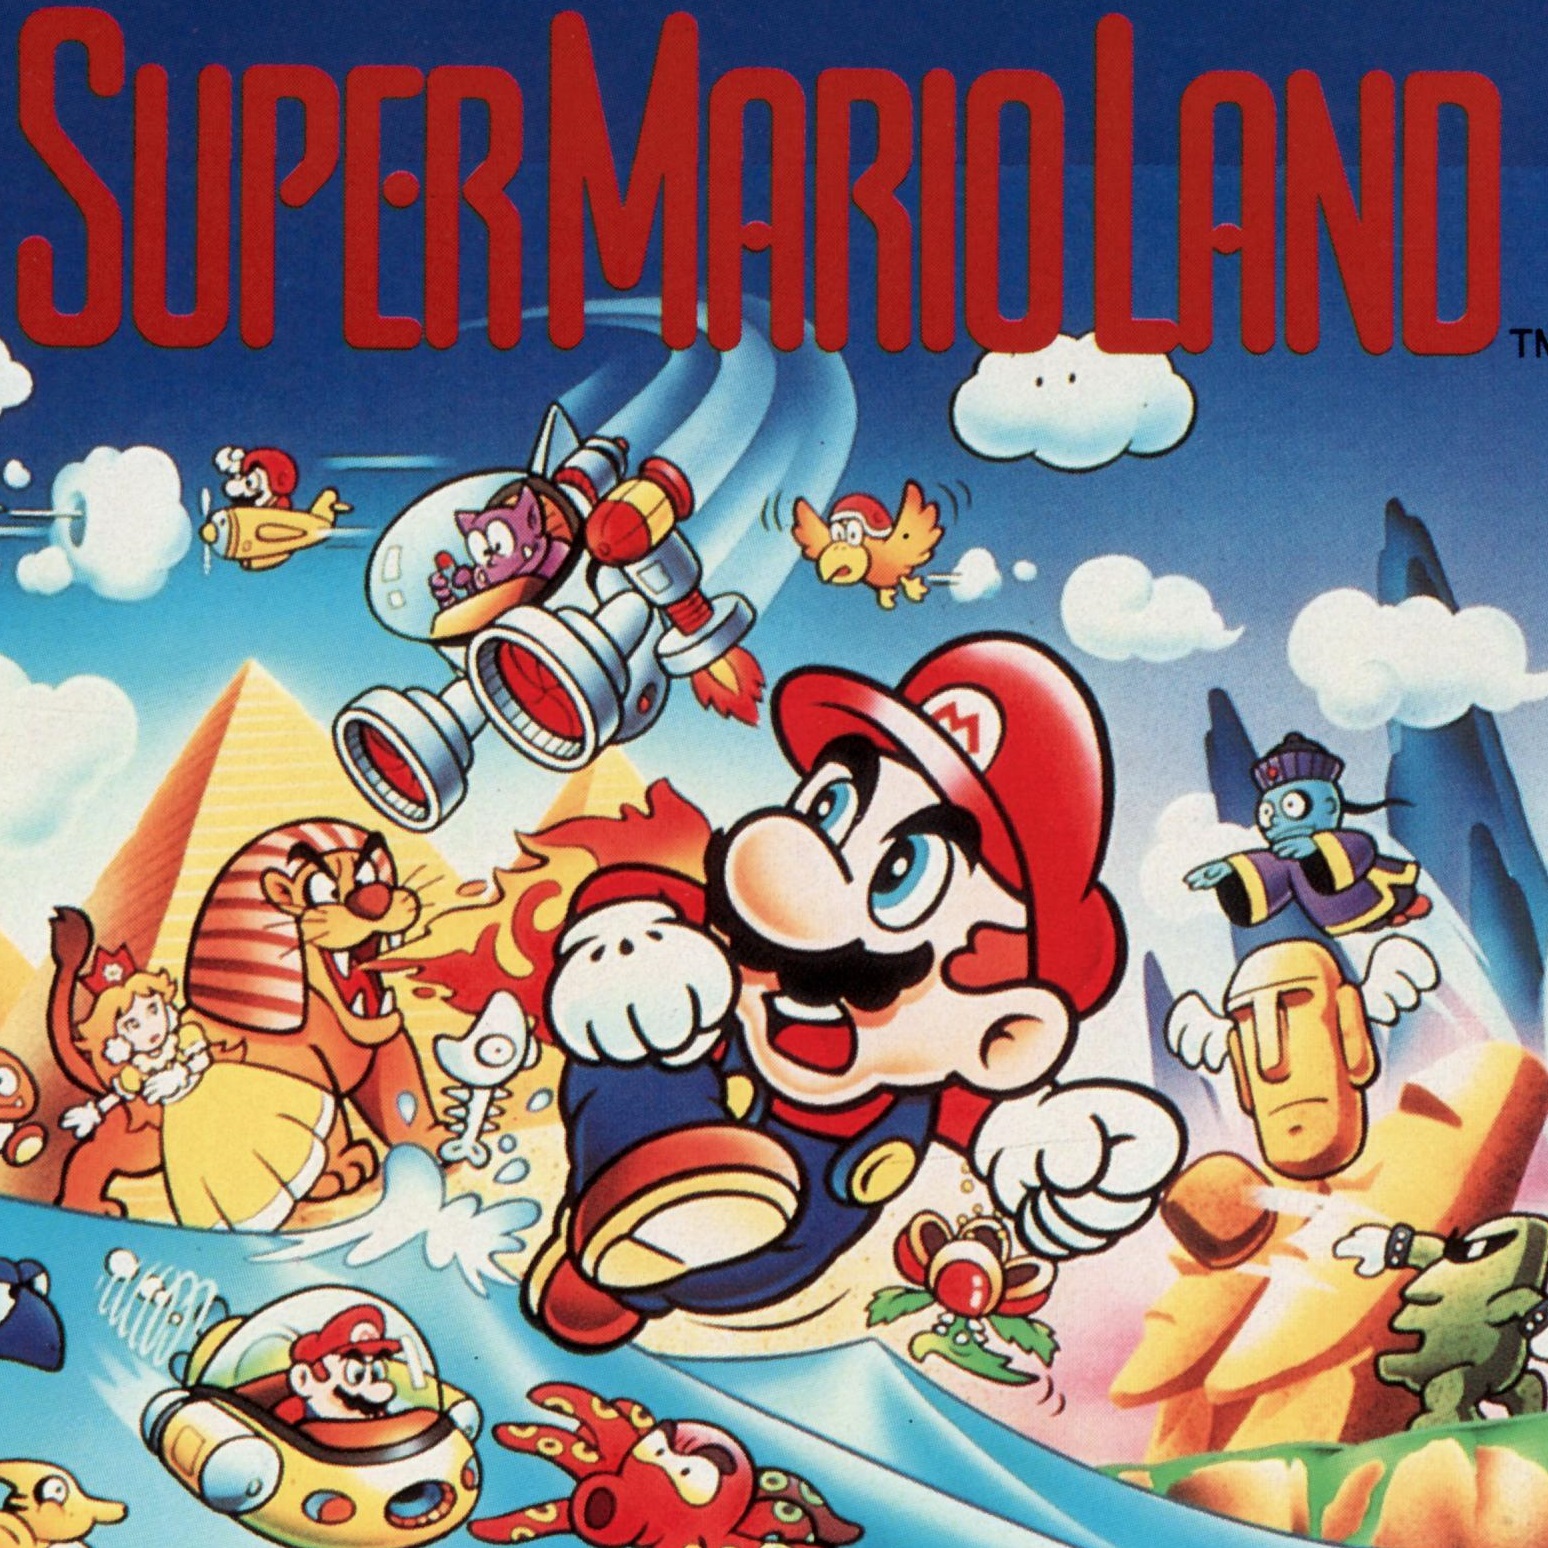 super mario 3d land emulator online